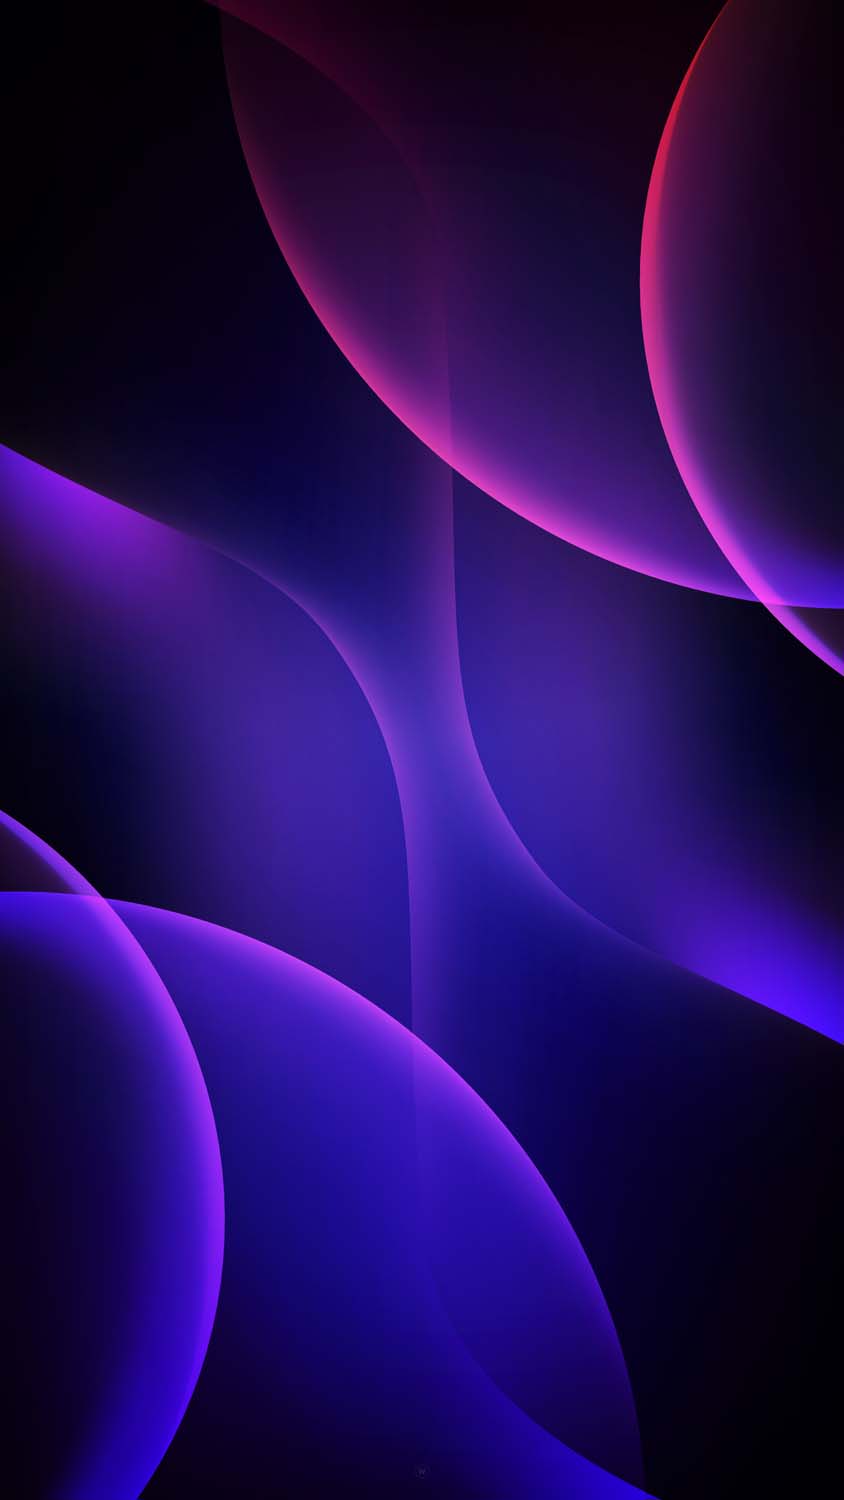 Blue Waves Abstract IPhone Wallpaper HD Wallpaper, iPhone Wallpaper